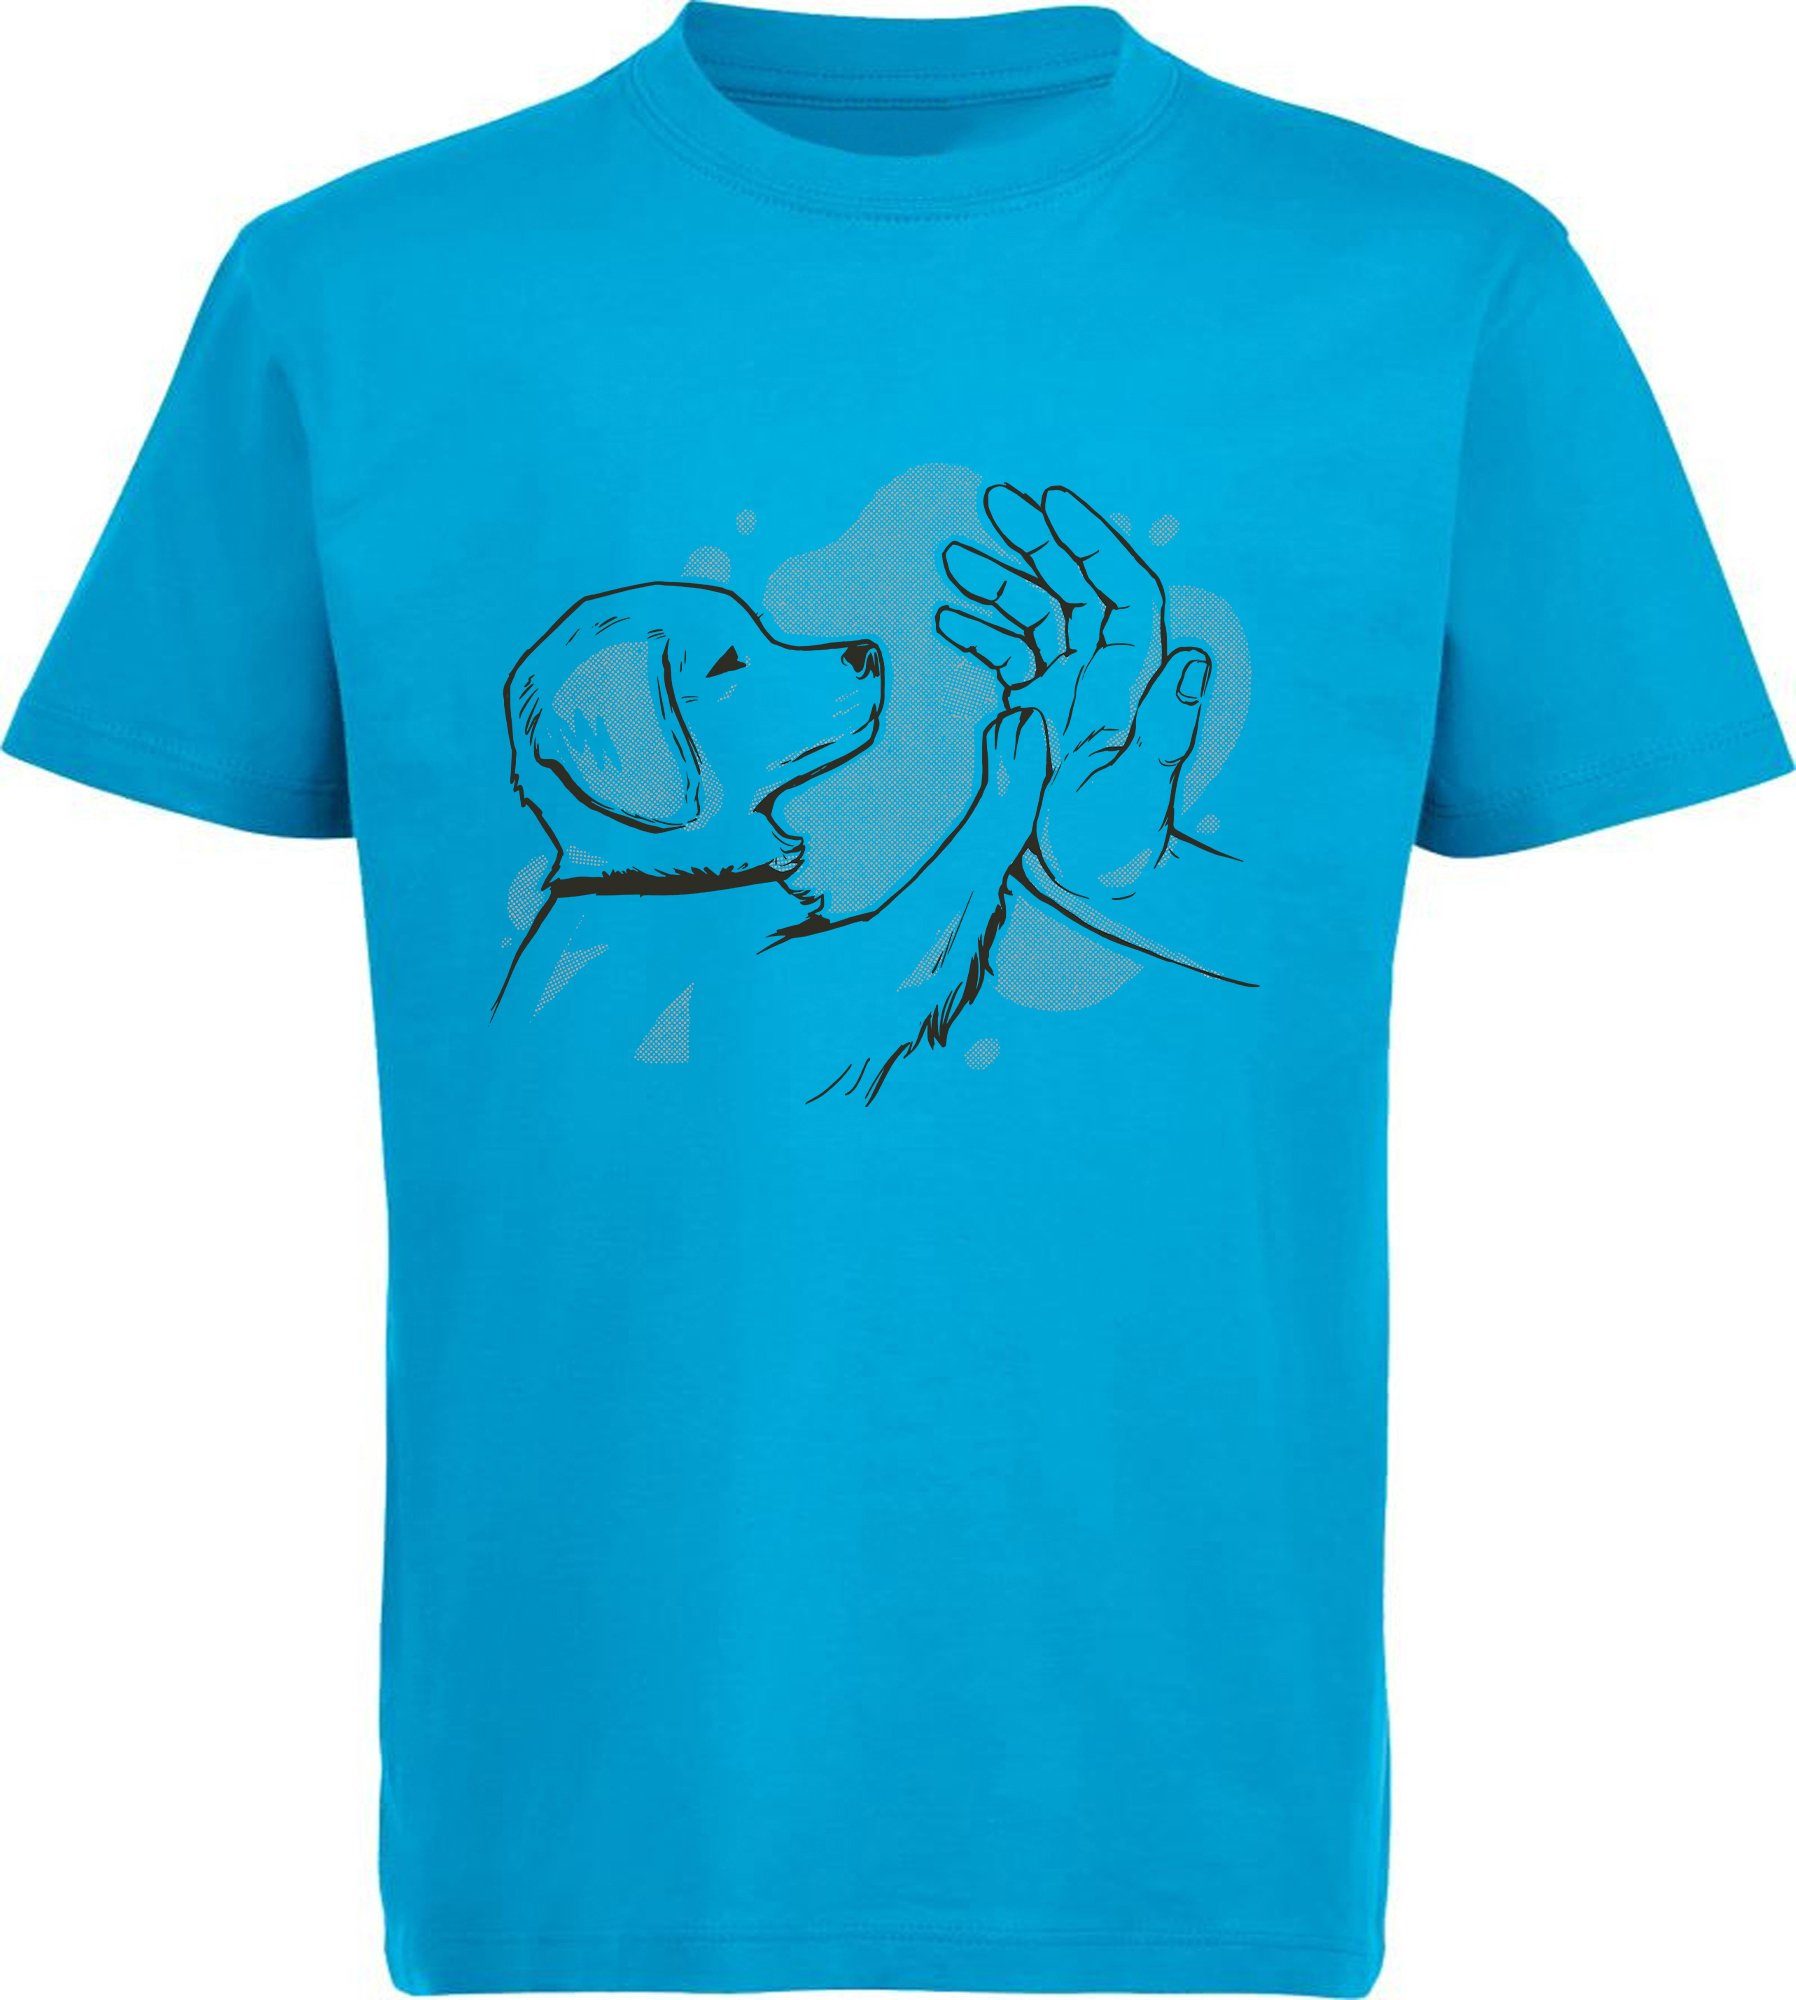 MyDesign24 Print-Shirt Kinder Hunde T-Shirt bedruckt - Labrador Welpe der Pfötchen gibt Baumwollshirt mit Aufdruck, i241 aqua blau